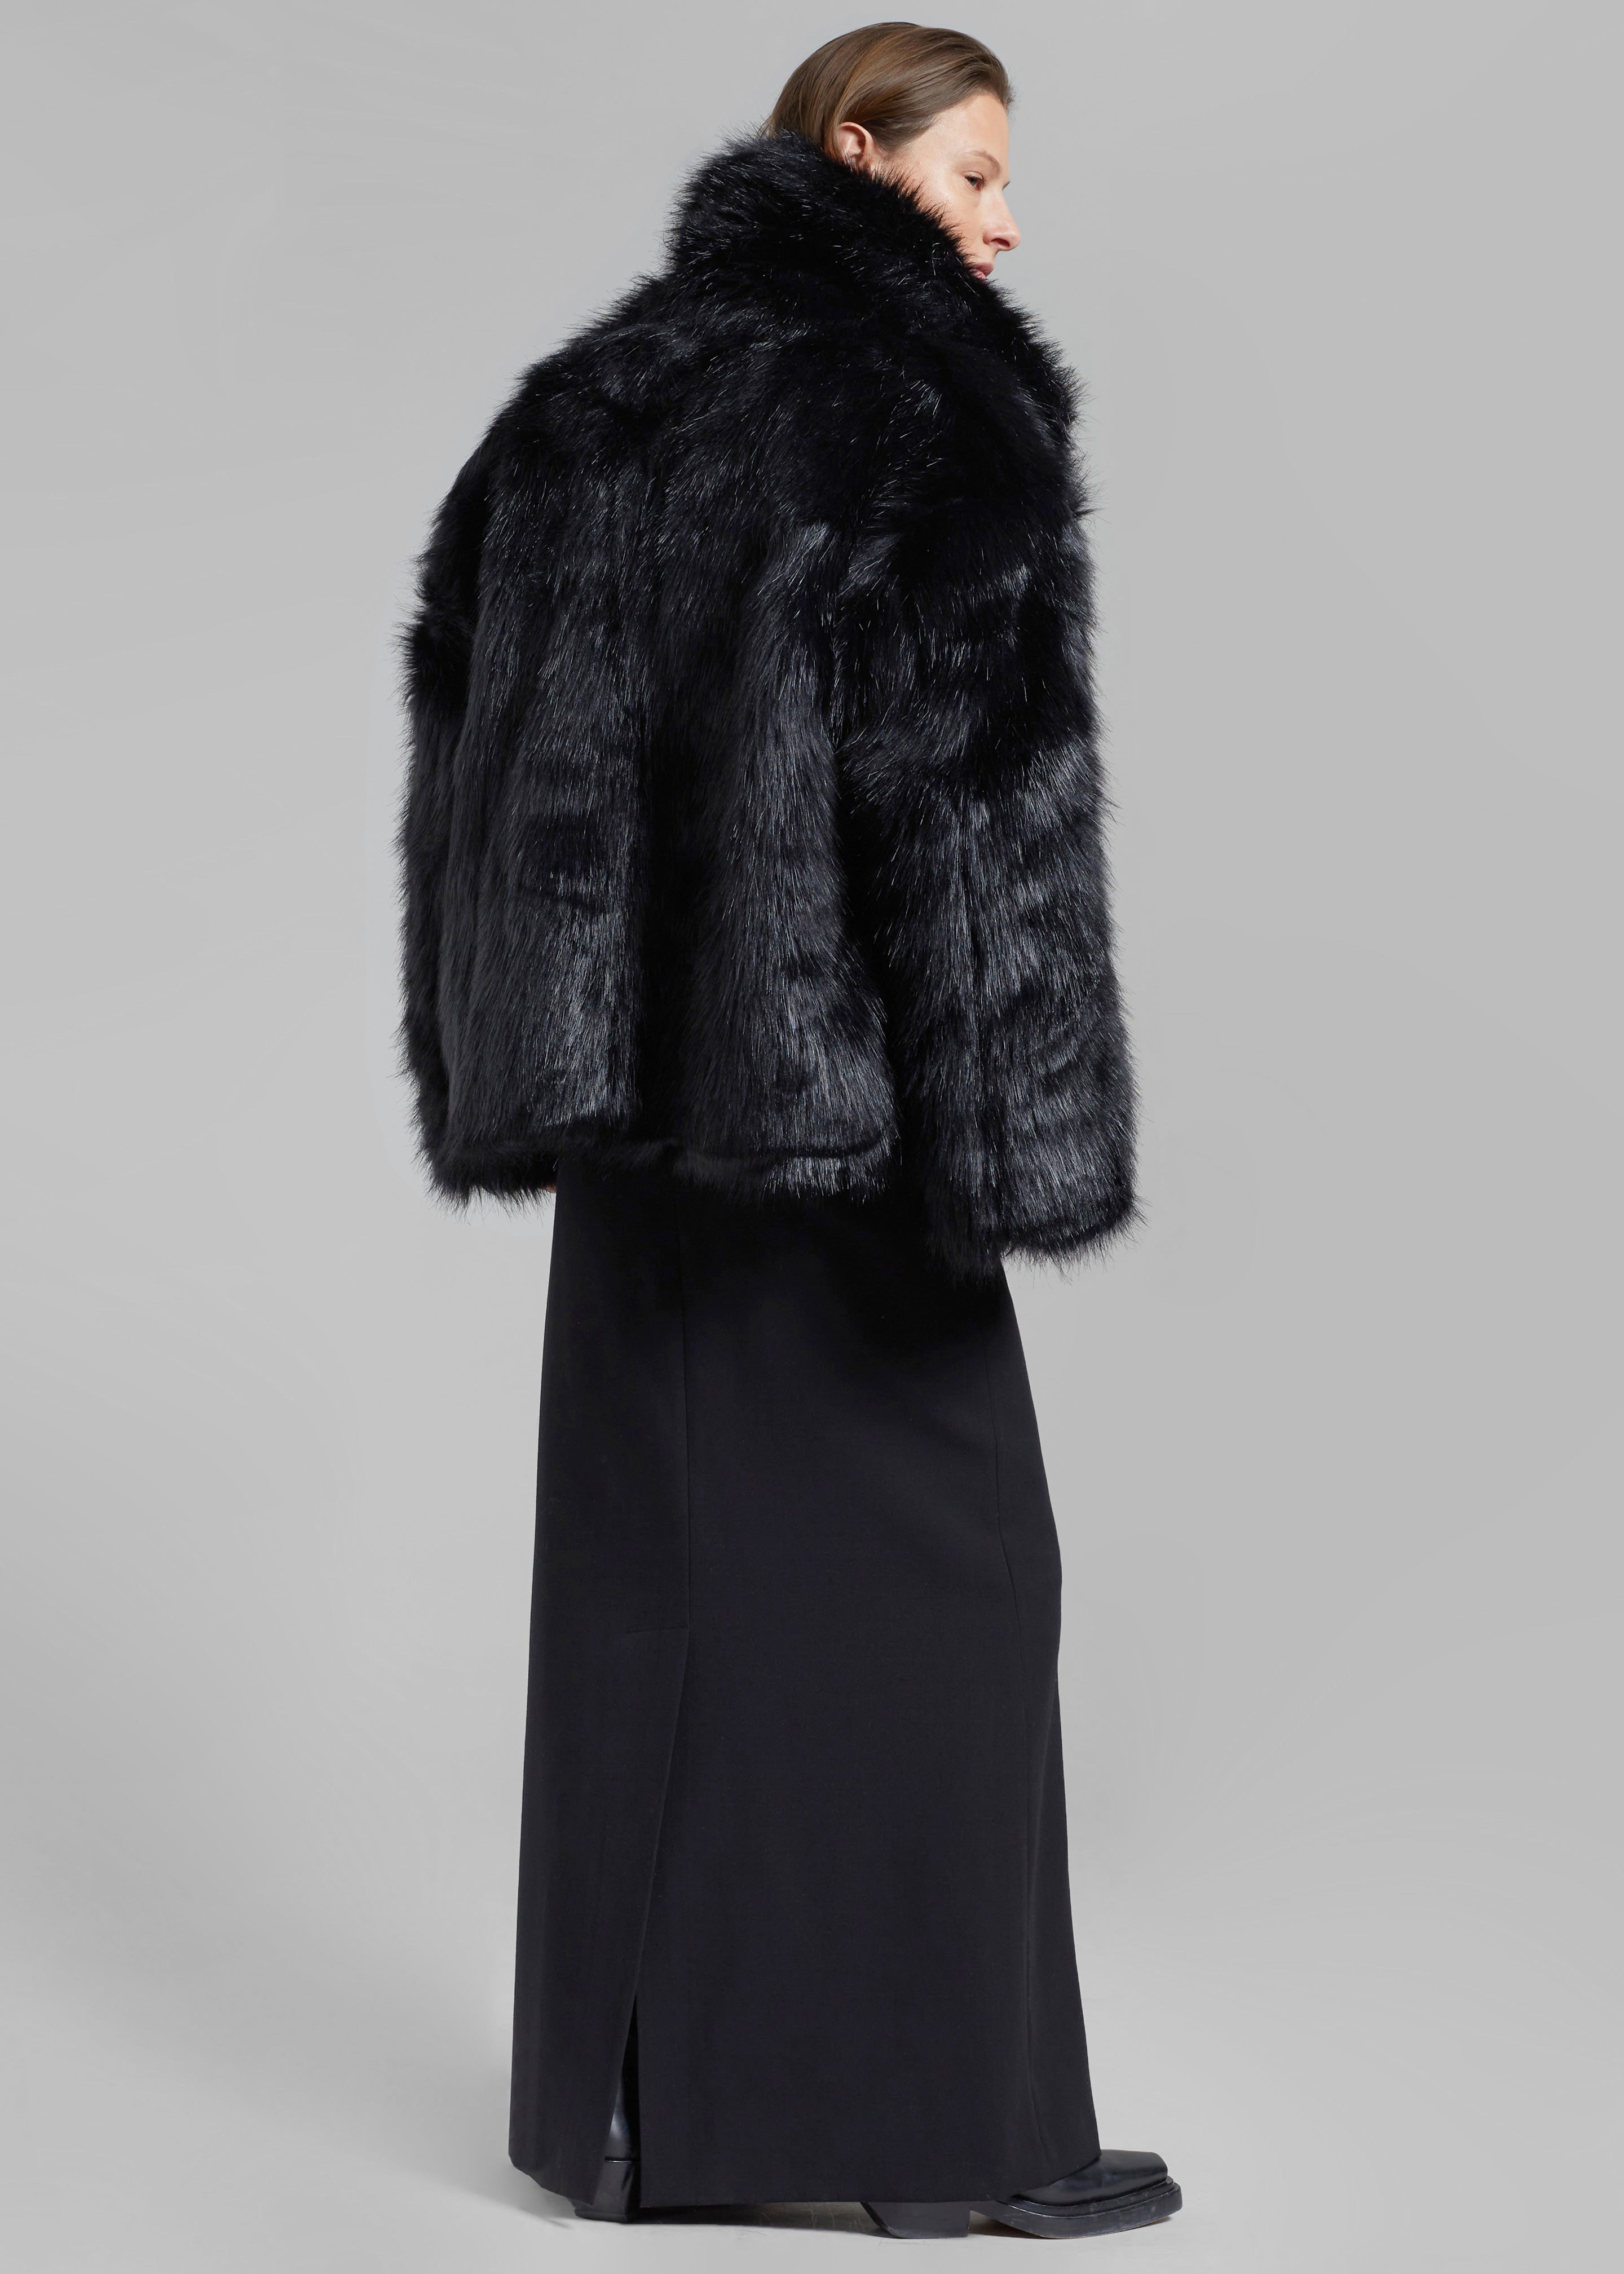 Fallon Short Faux Fur Coat - Black - 9